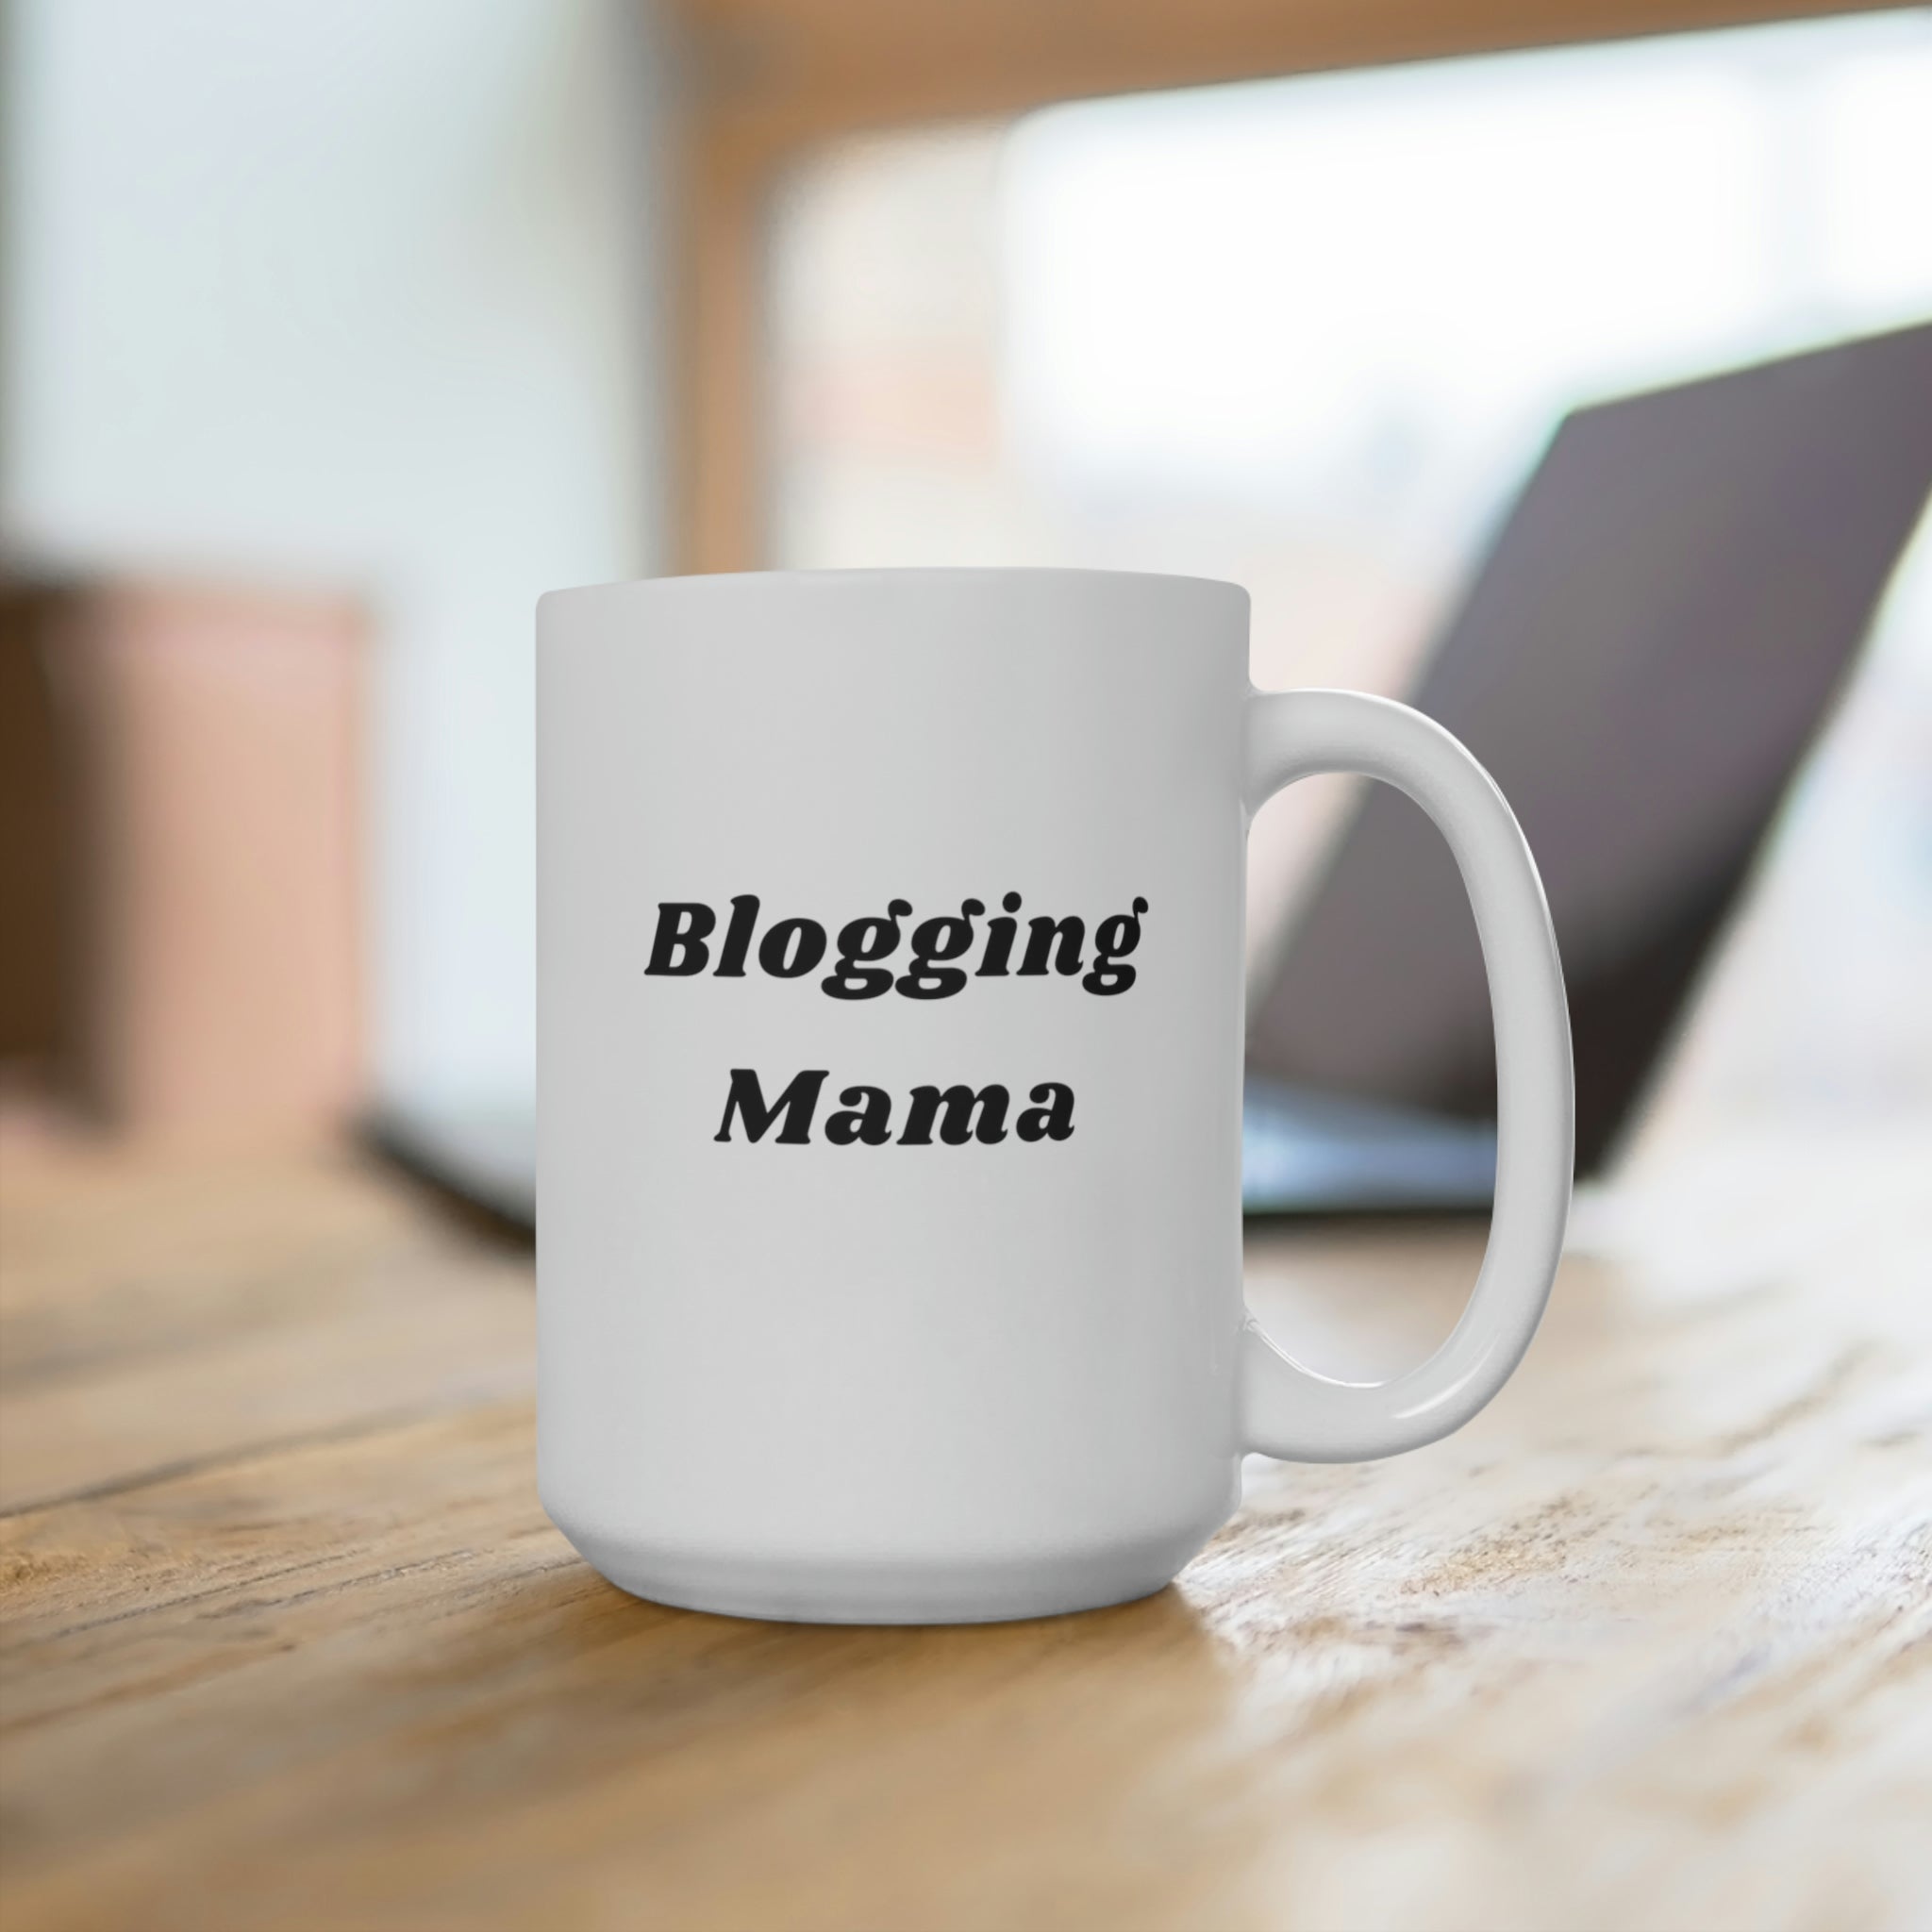 BLOGGING MAMA Ceramic Coffee Mug - 15oz